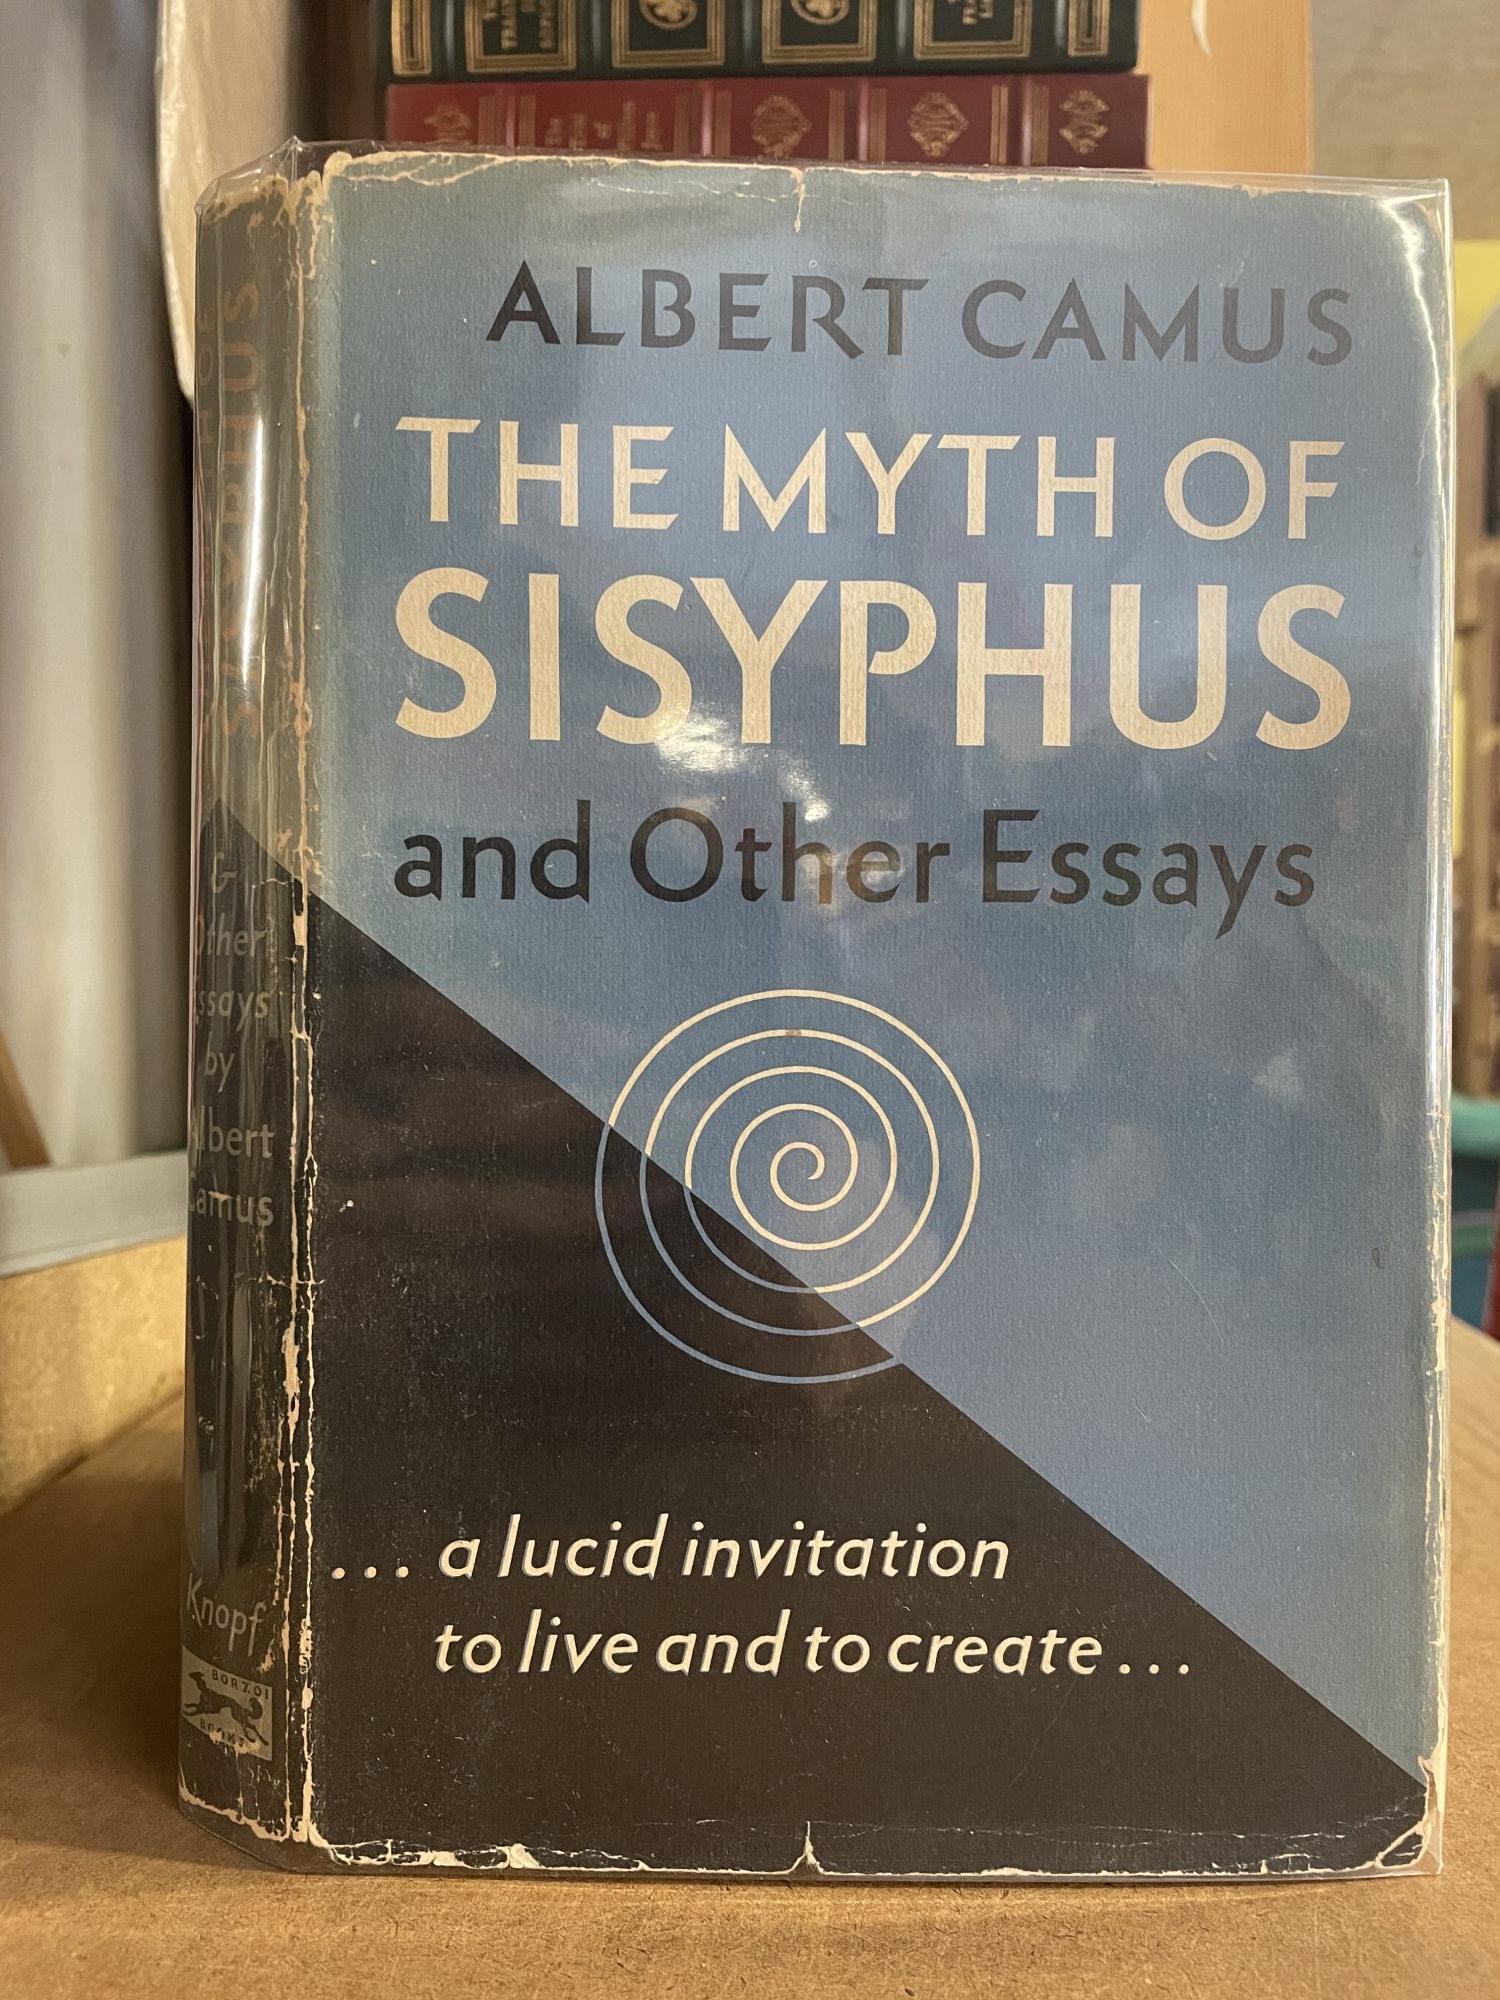 albert camus essay the myth of sisyphus